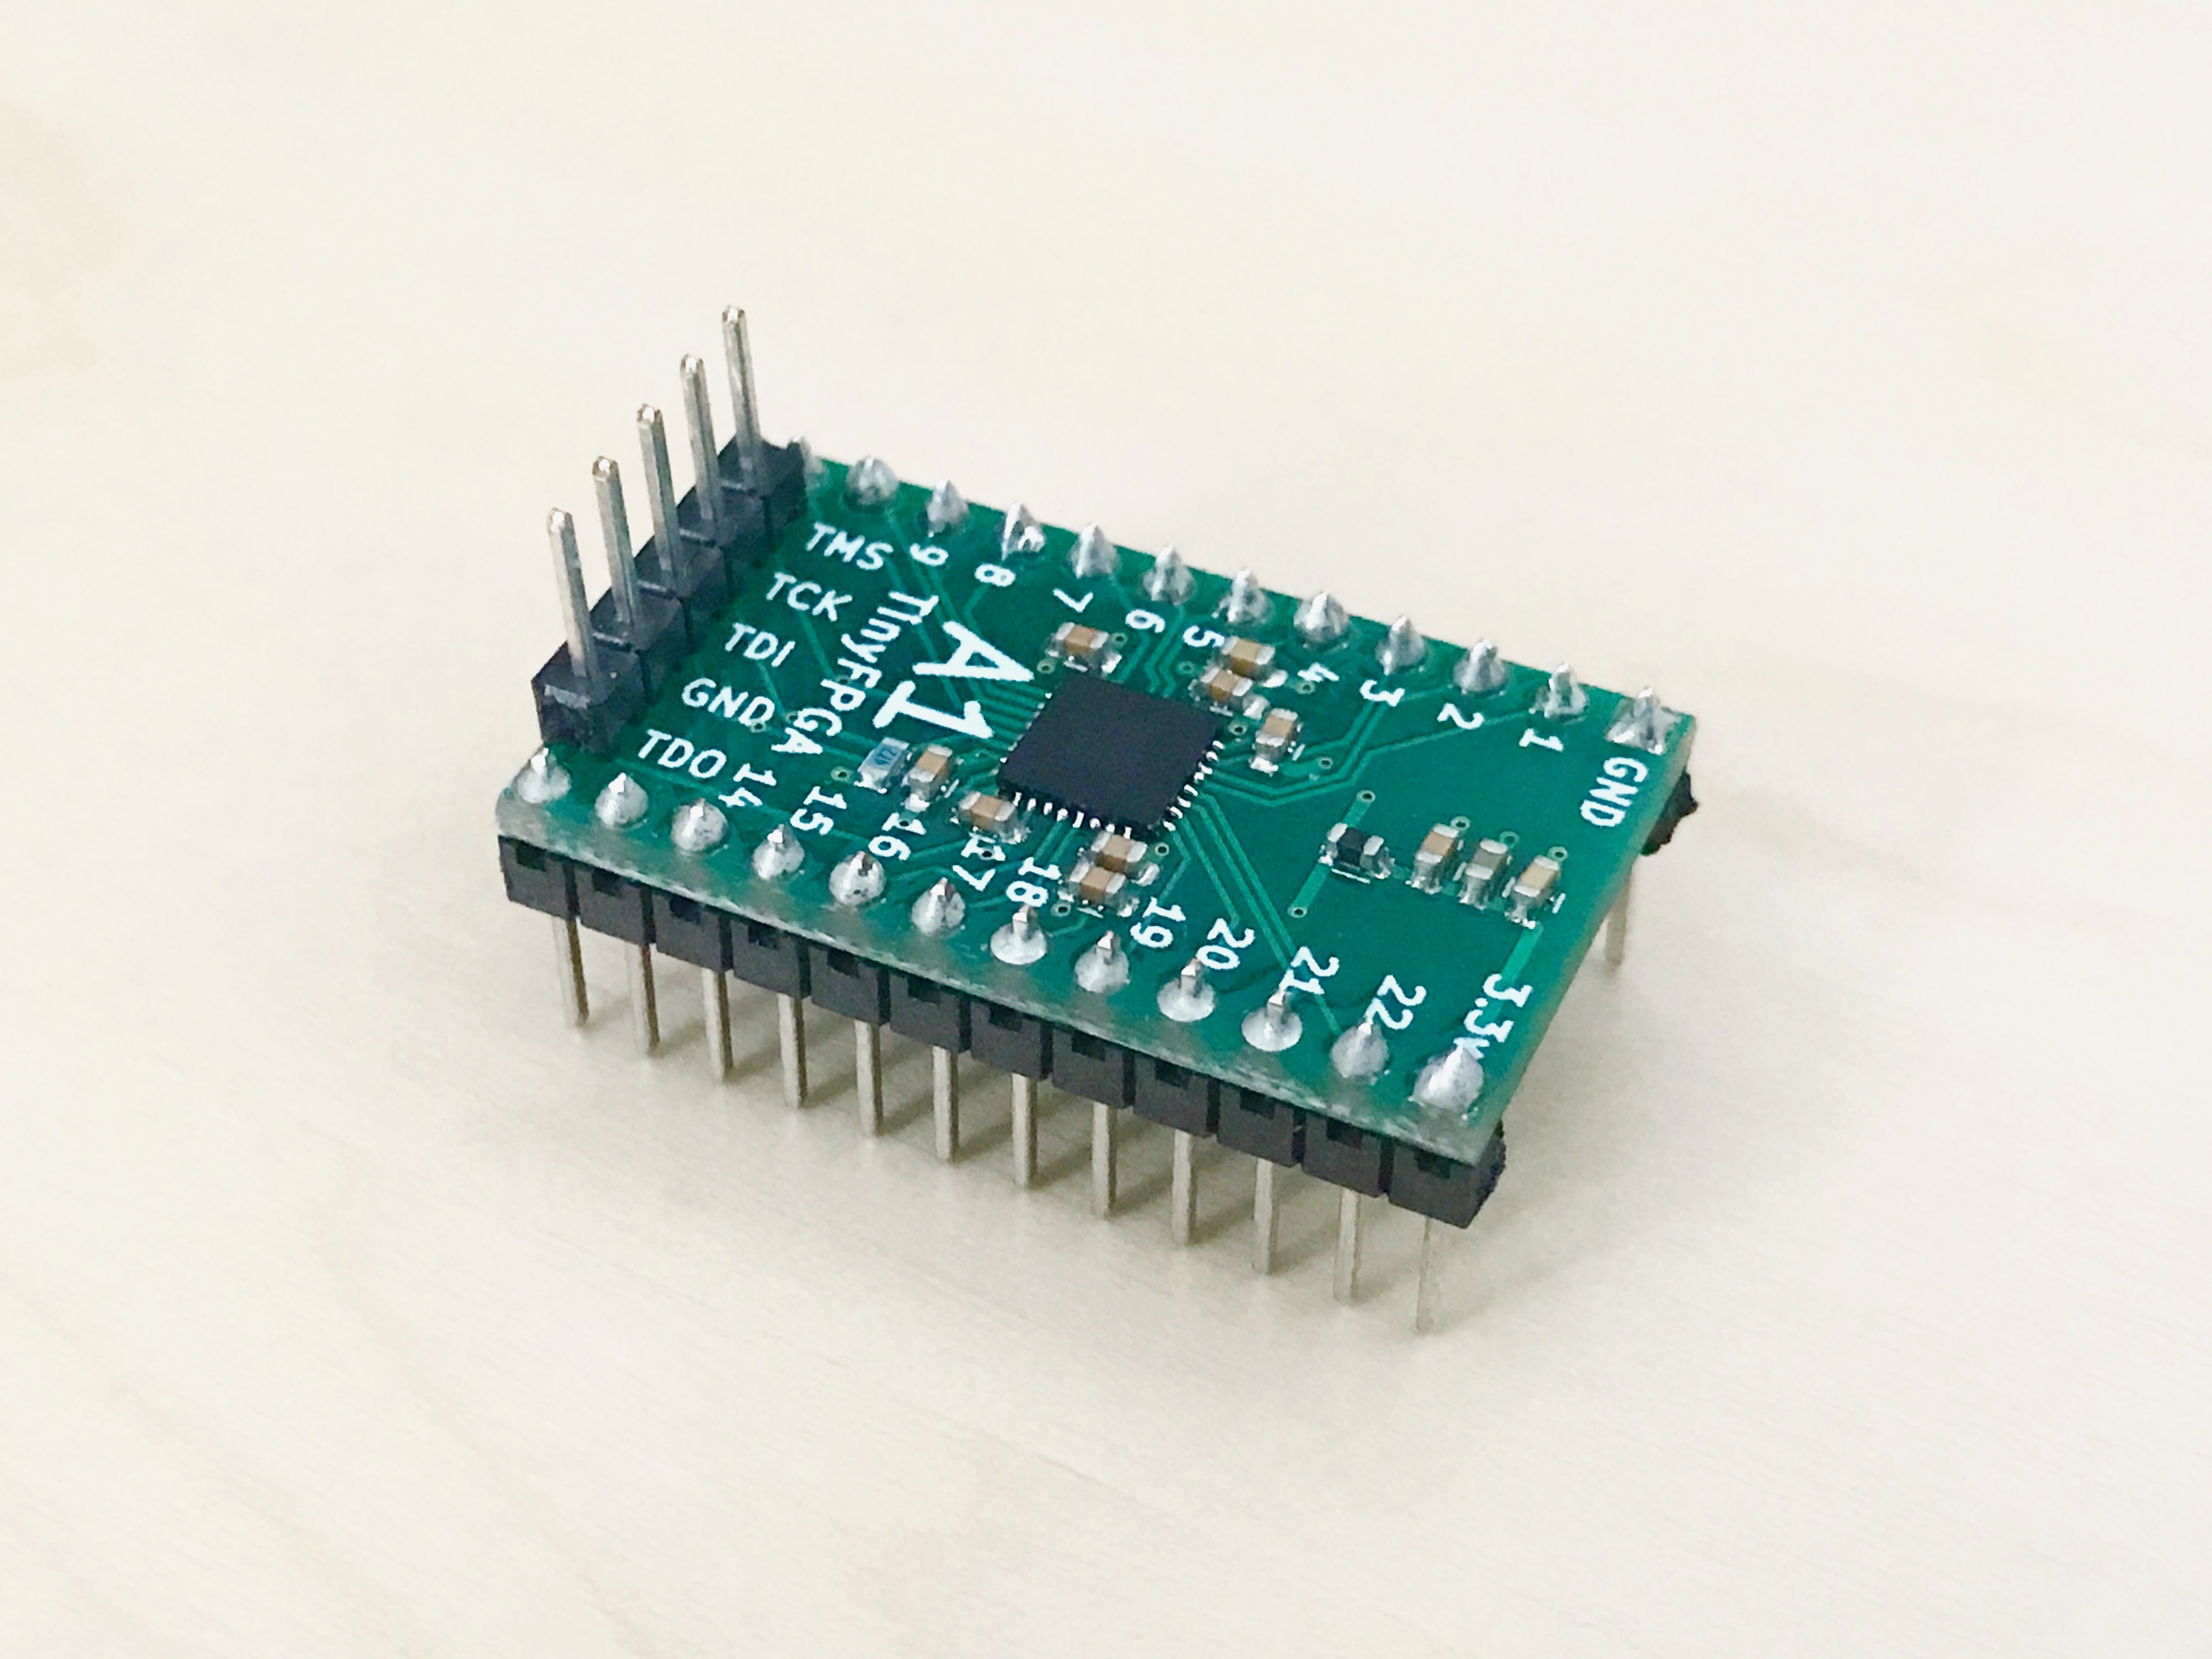 TinyFPGA A1 with pins